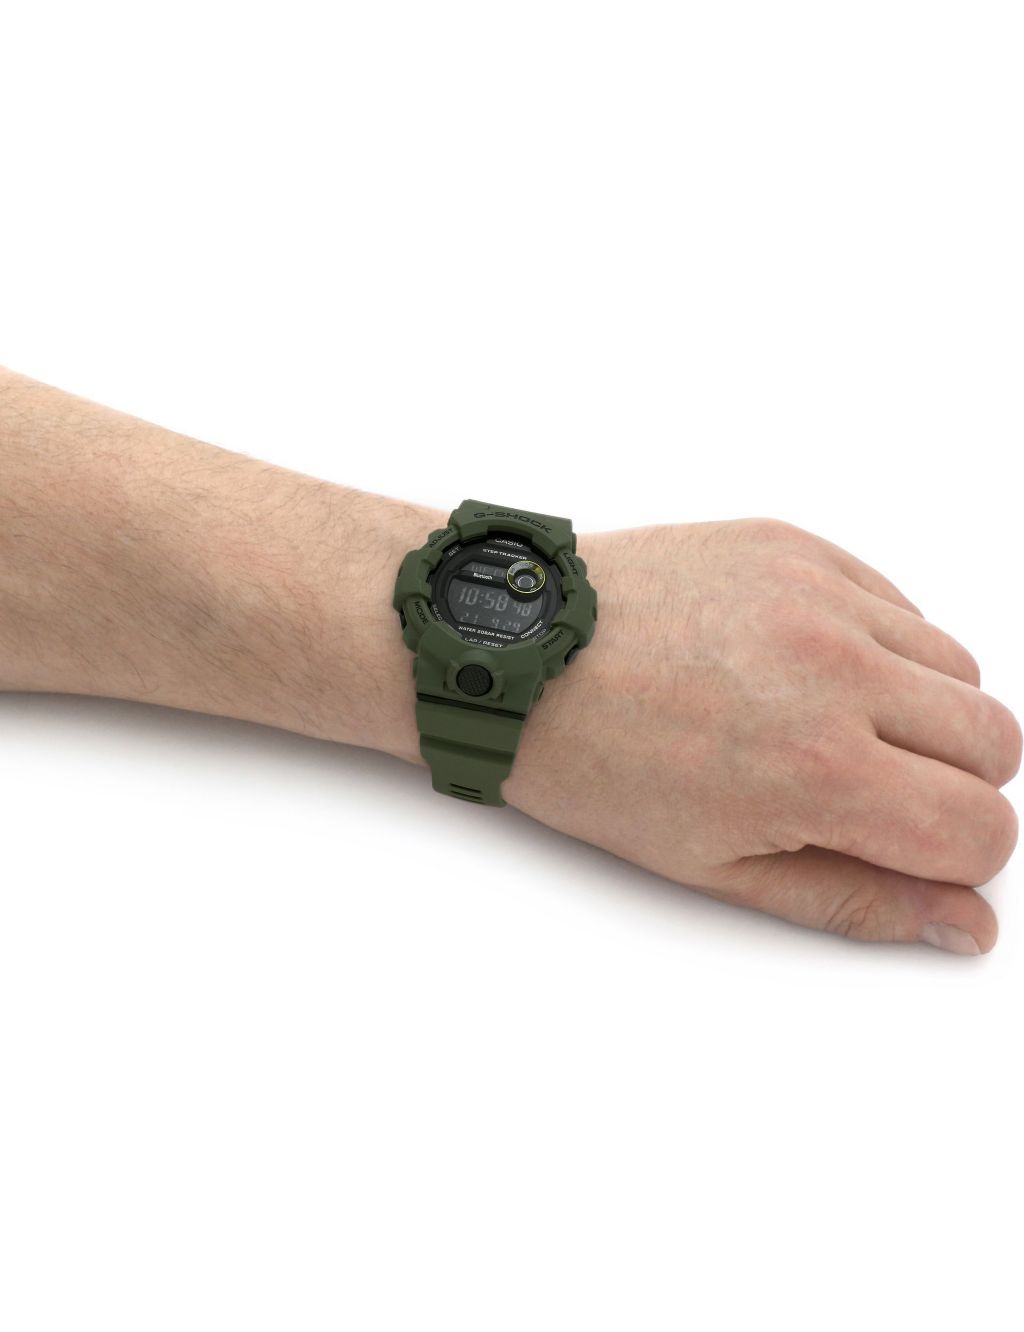 Casio G-Shock Waterproof Watch image 2